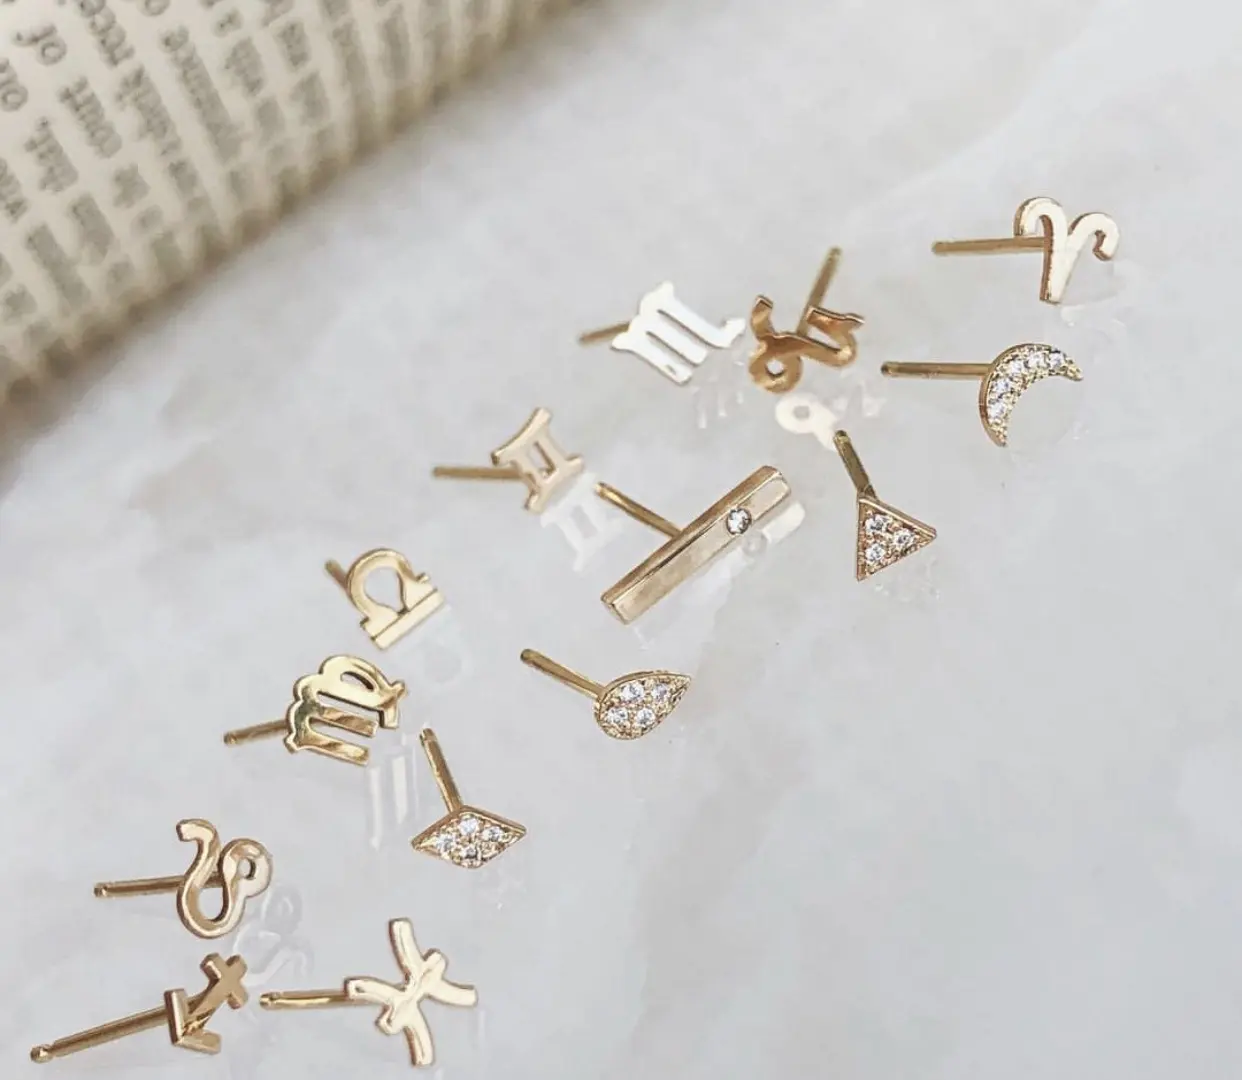 Minimalist Delicate Jeweri Stainless Steel Jewelry Earrings Women 18k Gold Plated Tiny Zodiac Sign Stud Earrings